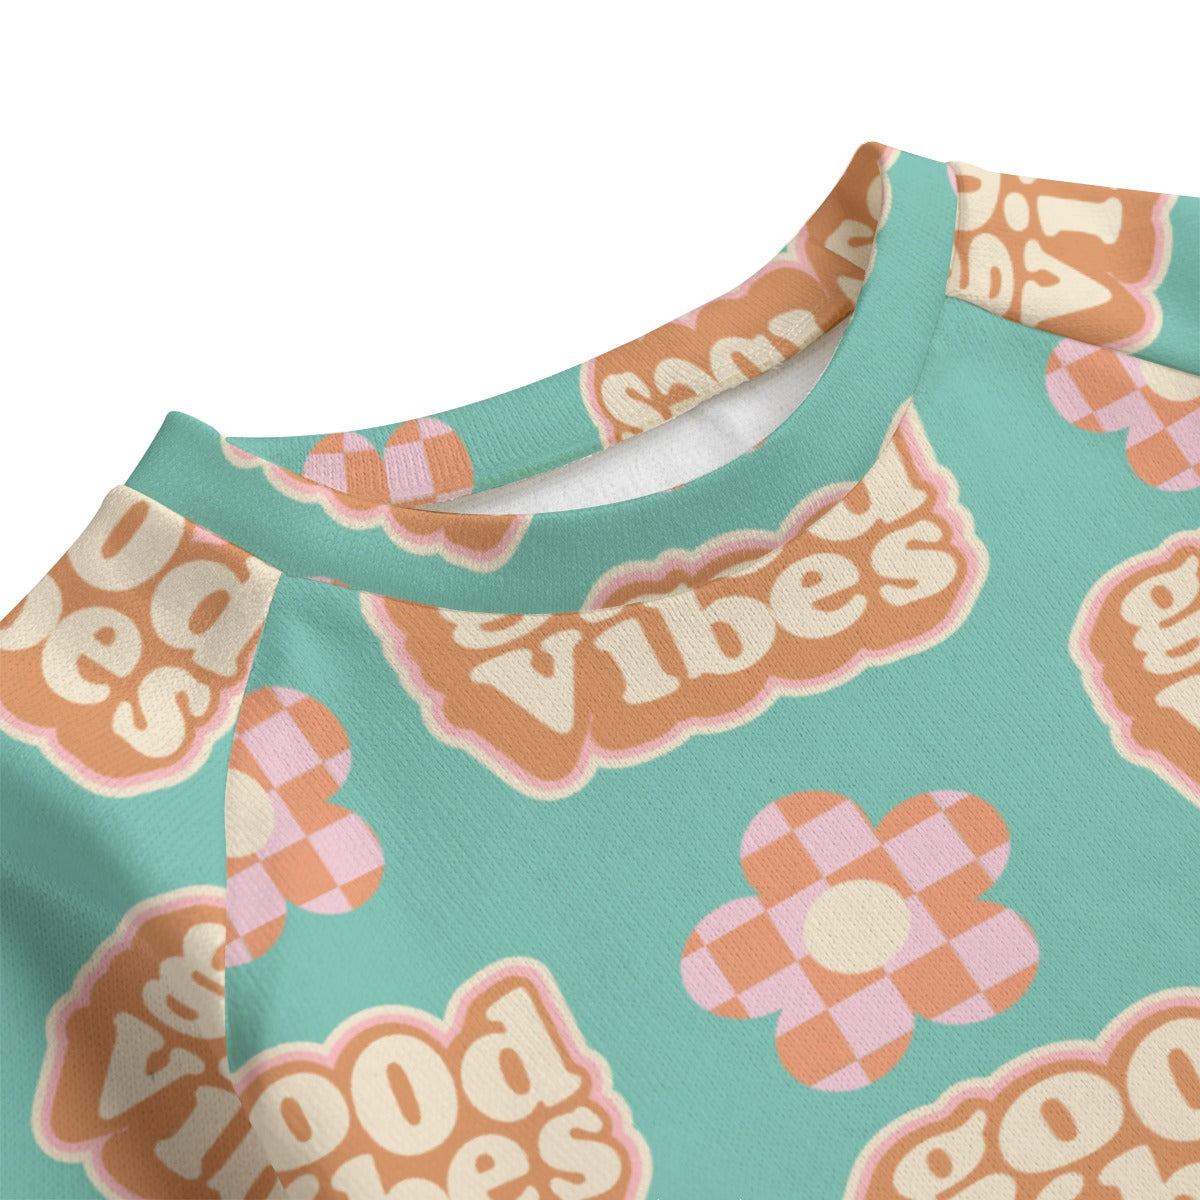 Retro Good Vibes Kid's Knitted Fleece Set